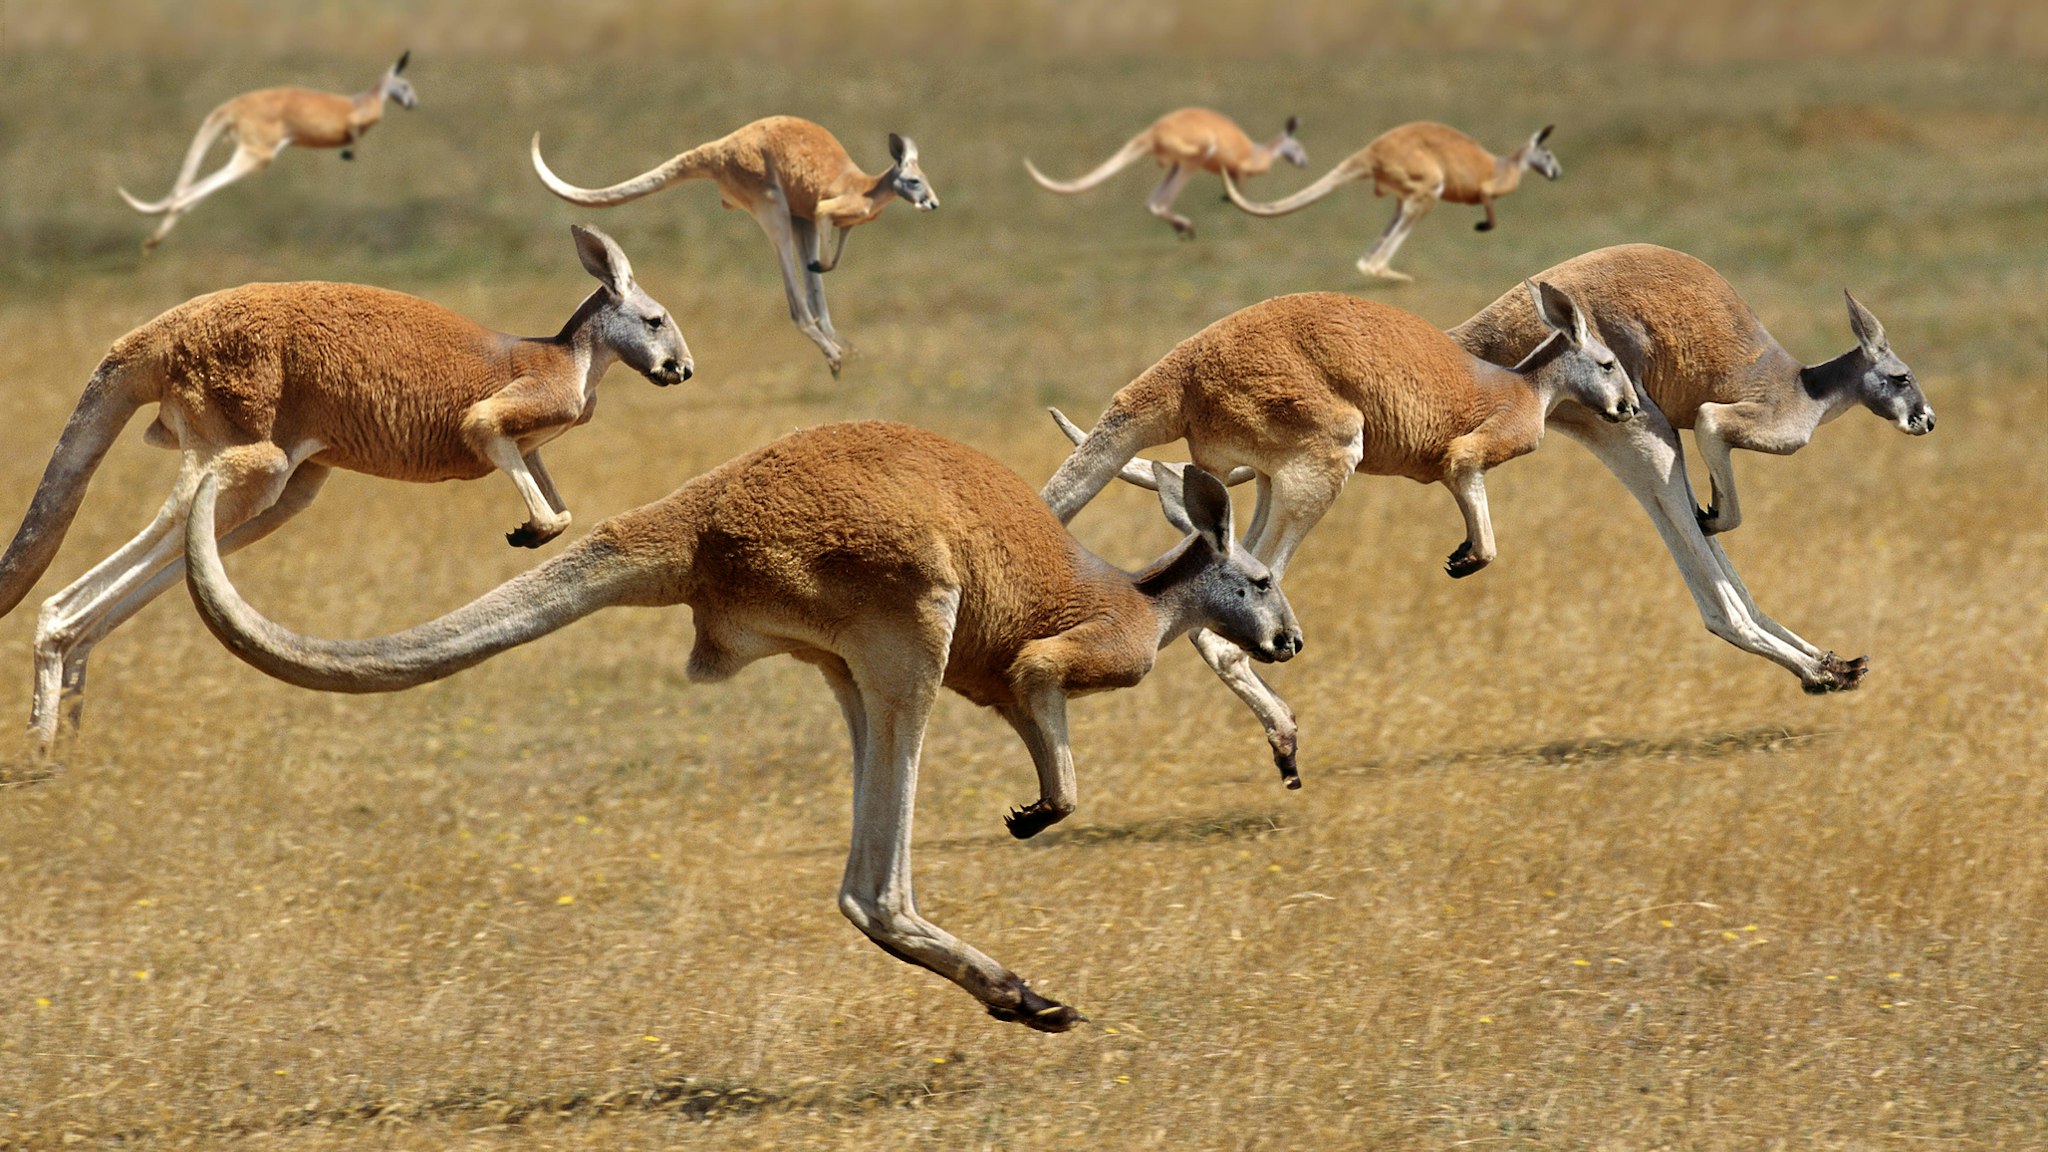 Red Kangaroo, macropus rufus, Australia, Group running - stock photo